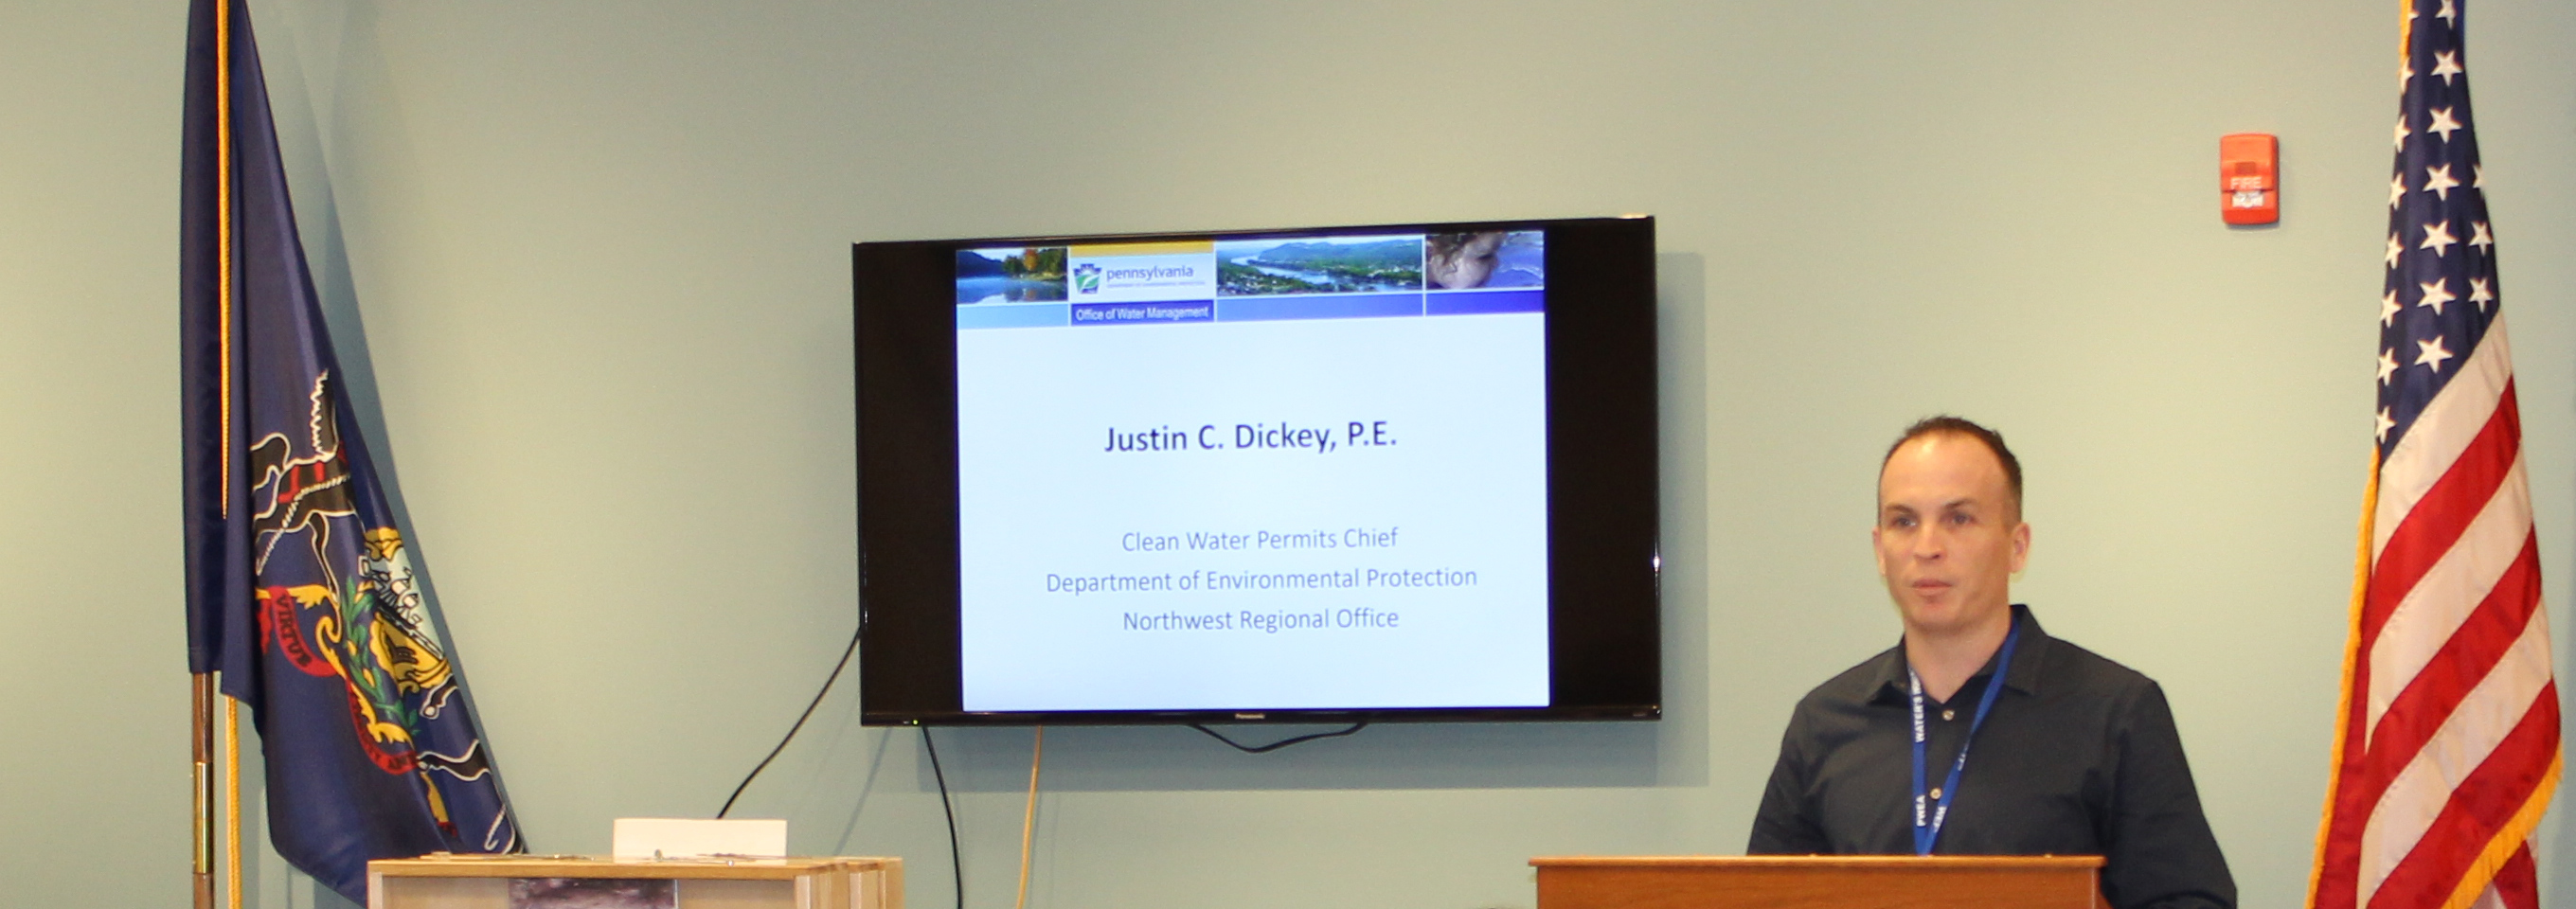 Justin Dickey at Engineering Day